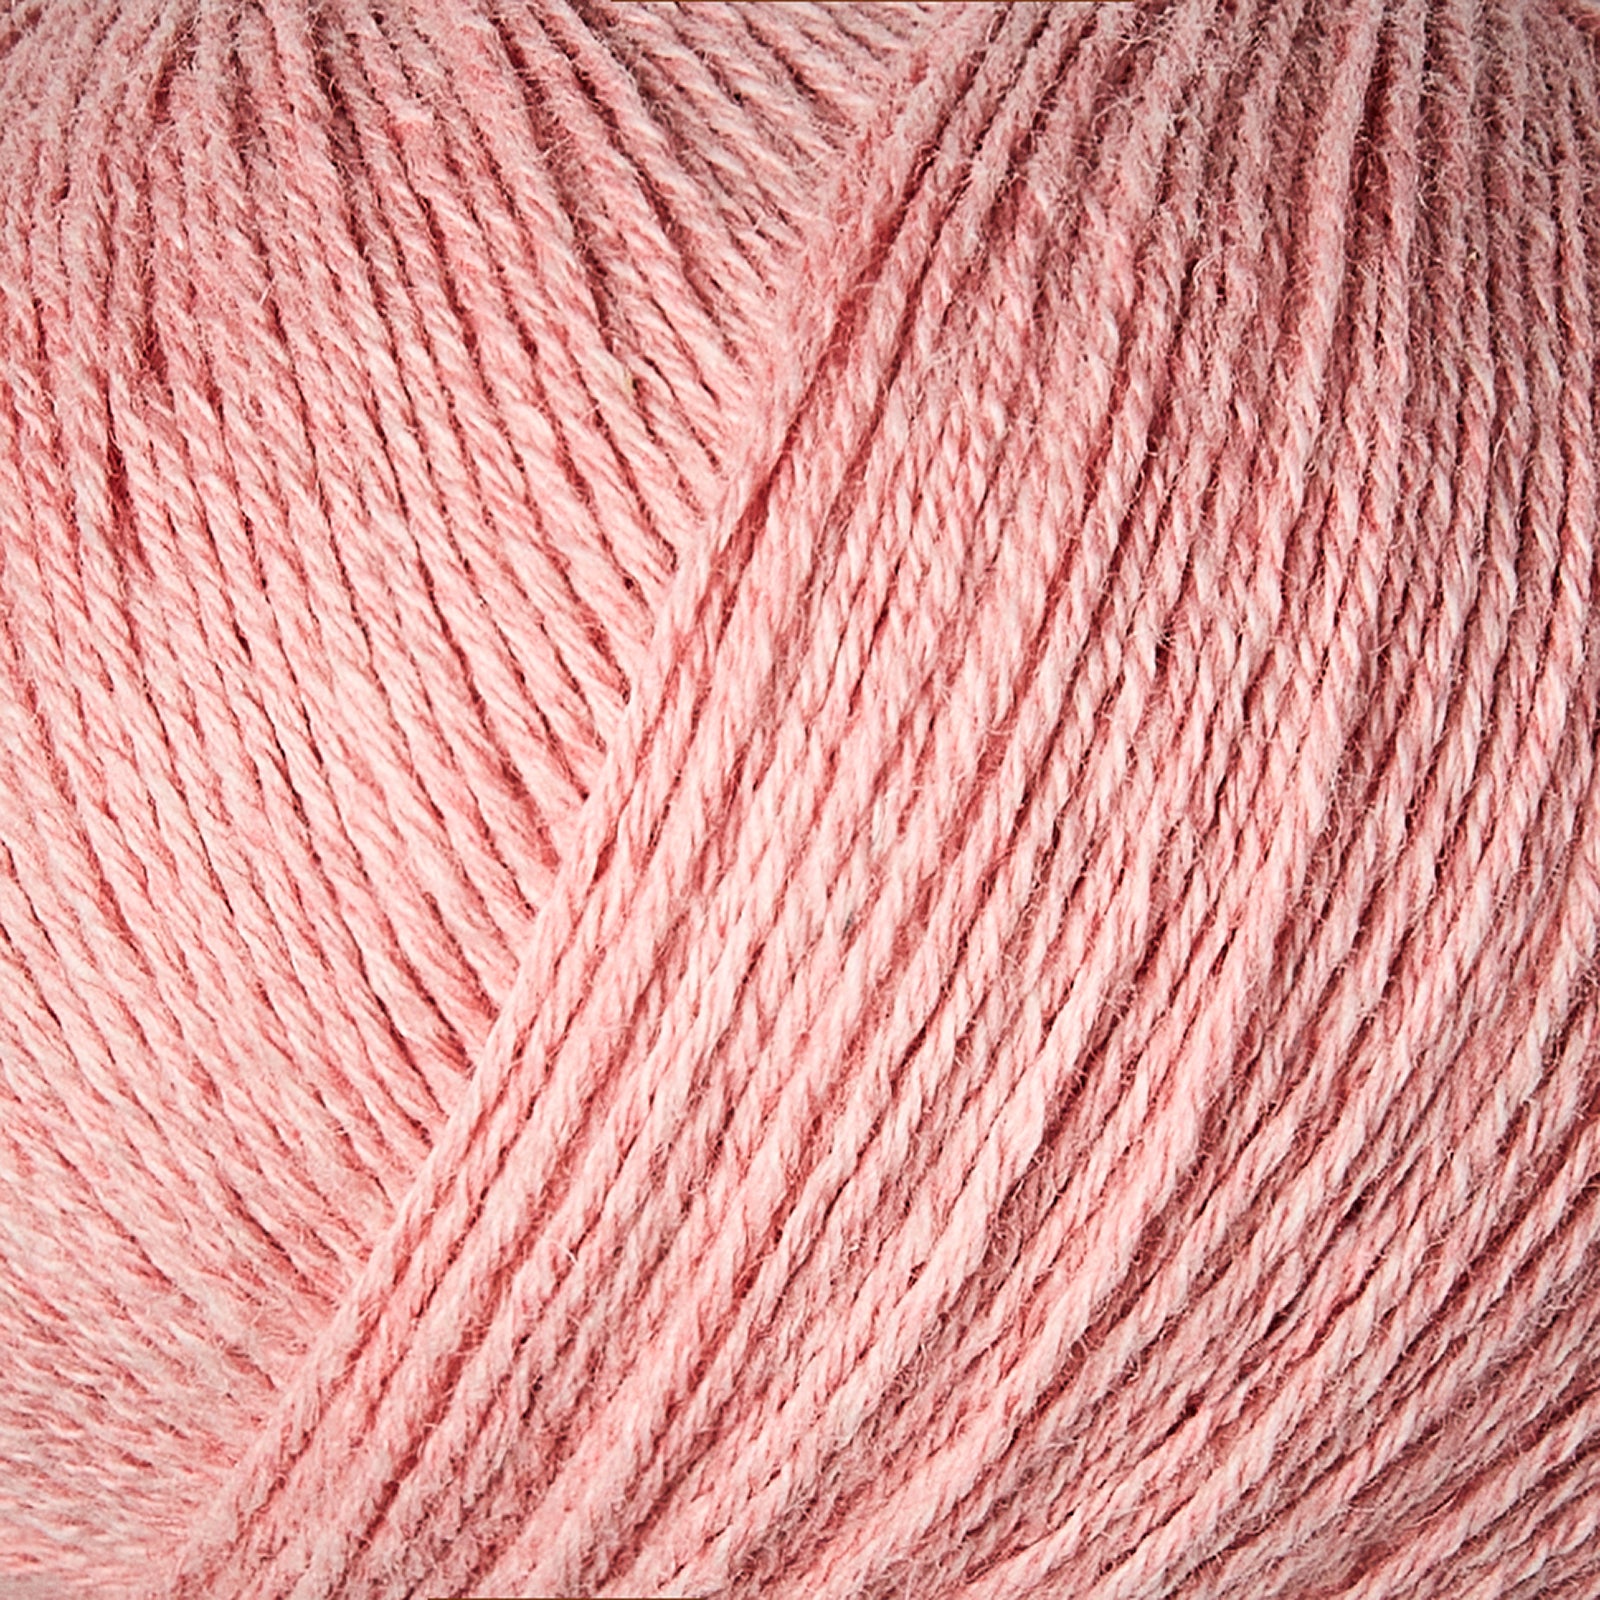 Knitting for Olive Cotton Merino - Strawberry Icecream